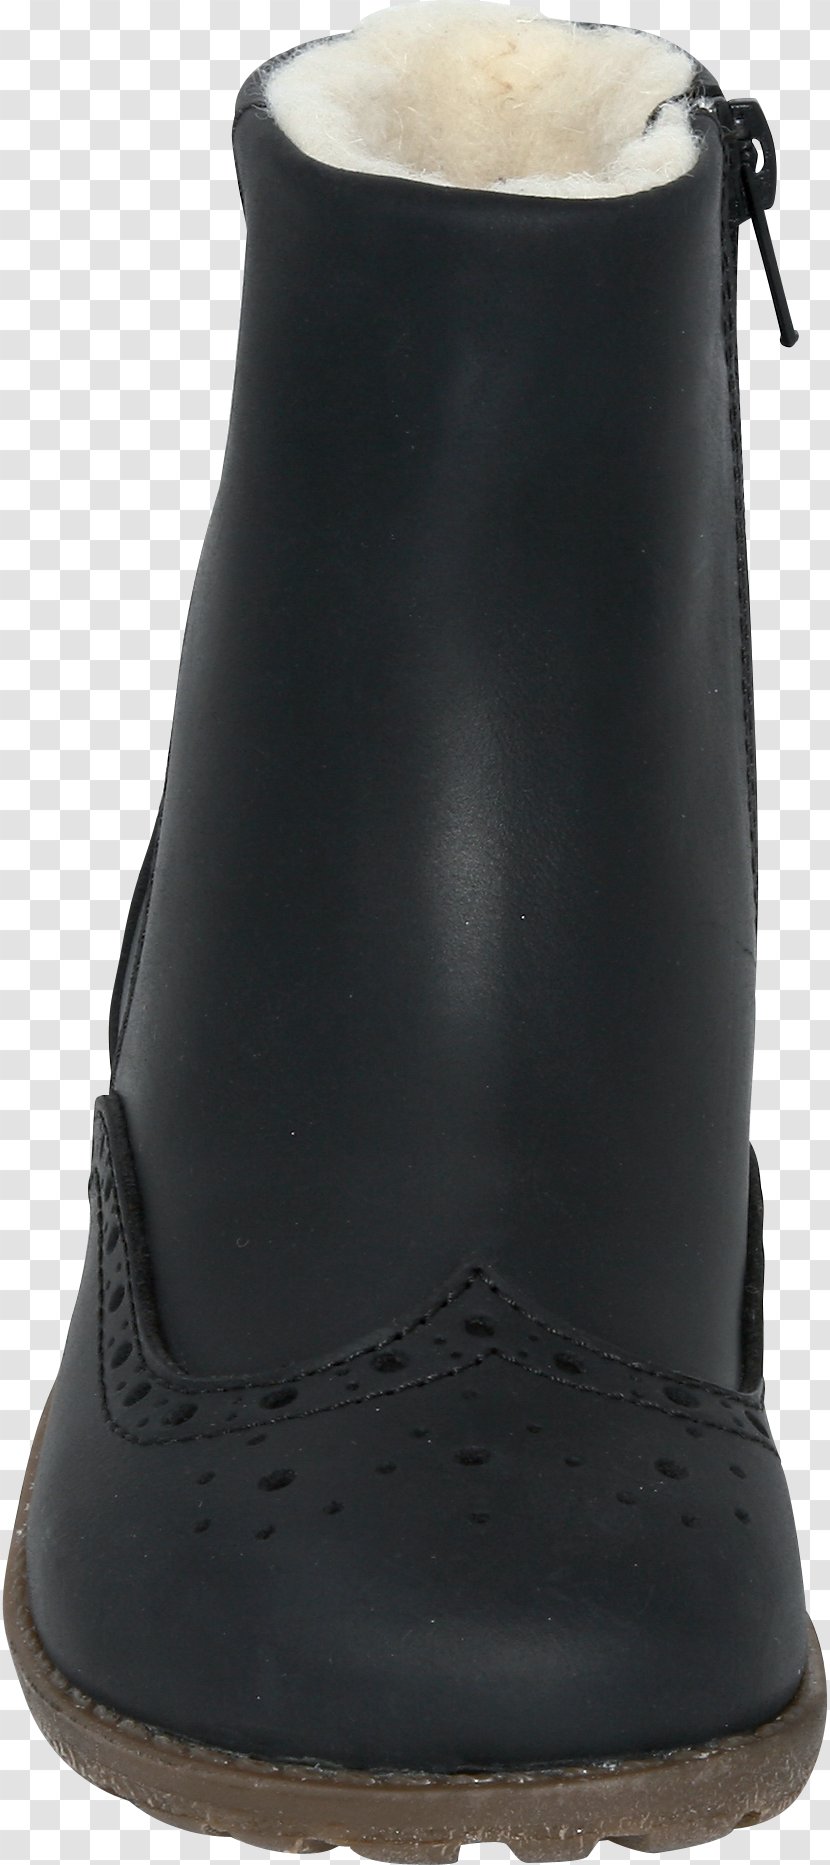 Shoe Boot Transparent PNG